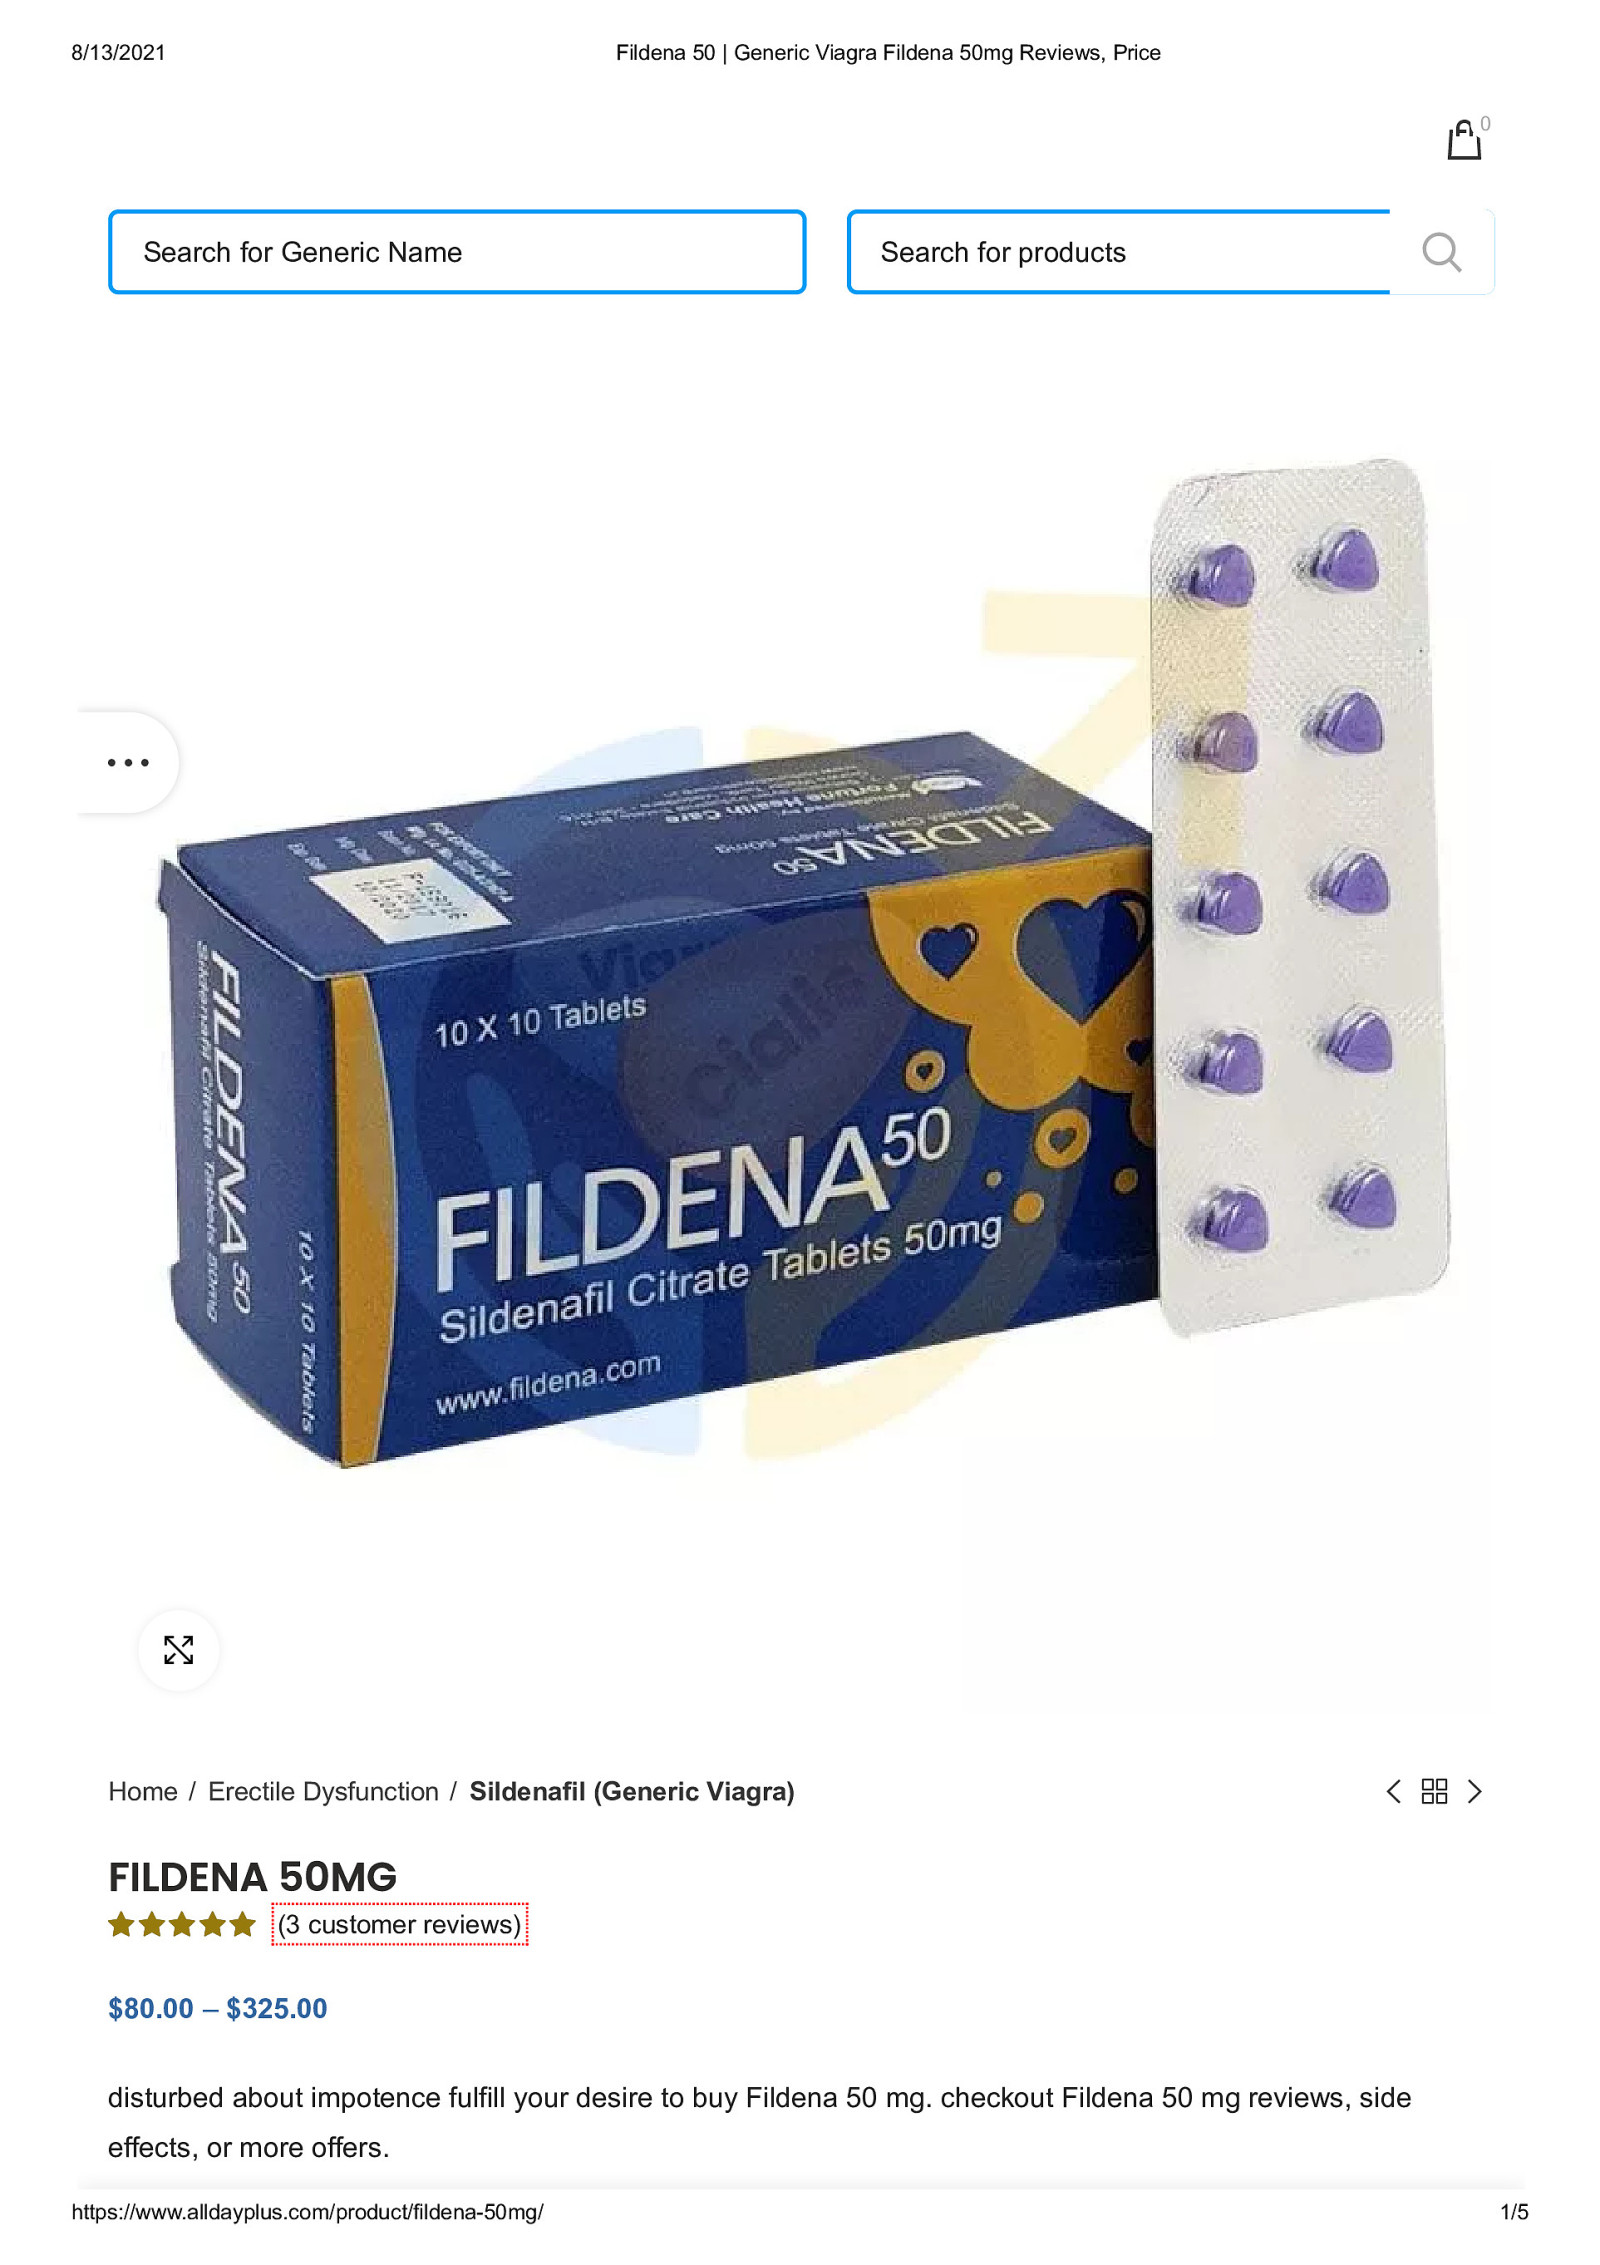 Fildena 50 mg USA, UK reviews online at Alldayplus